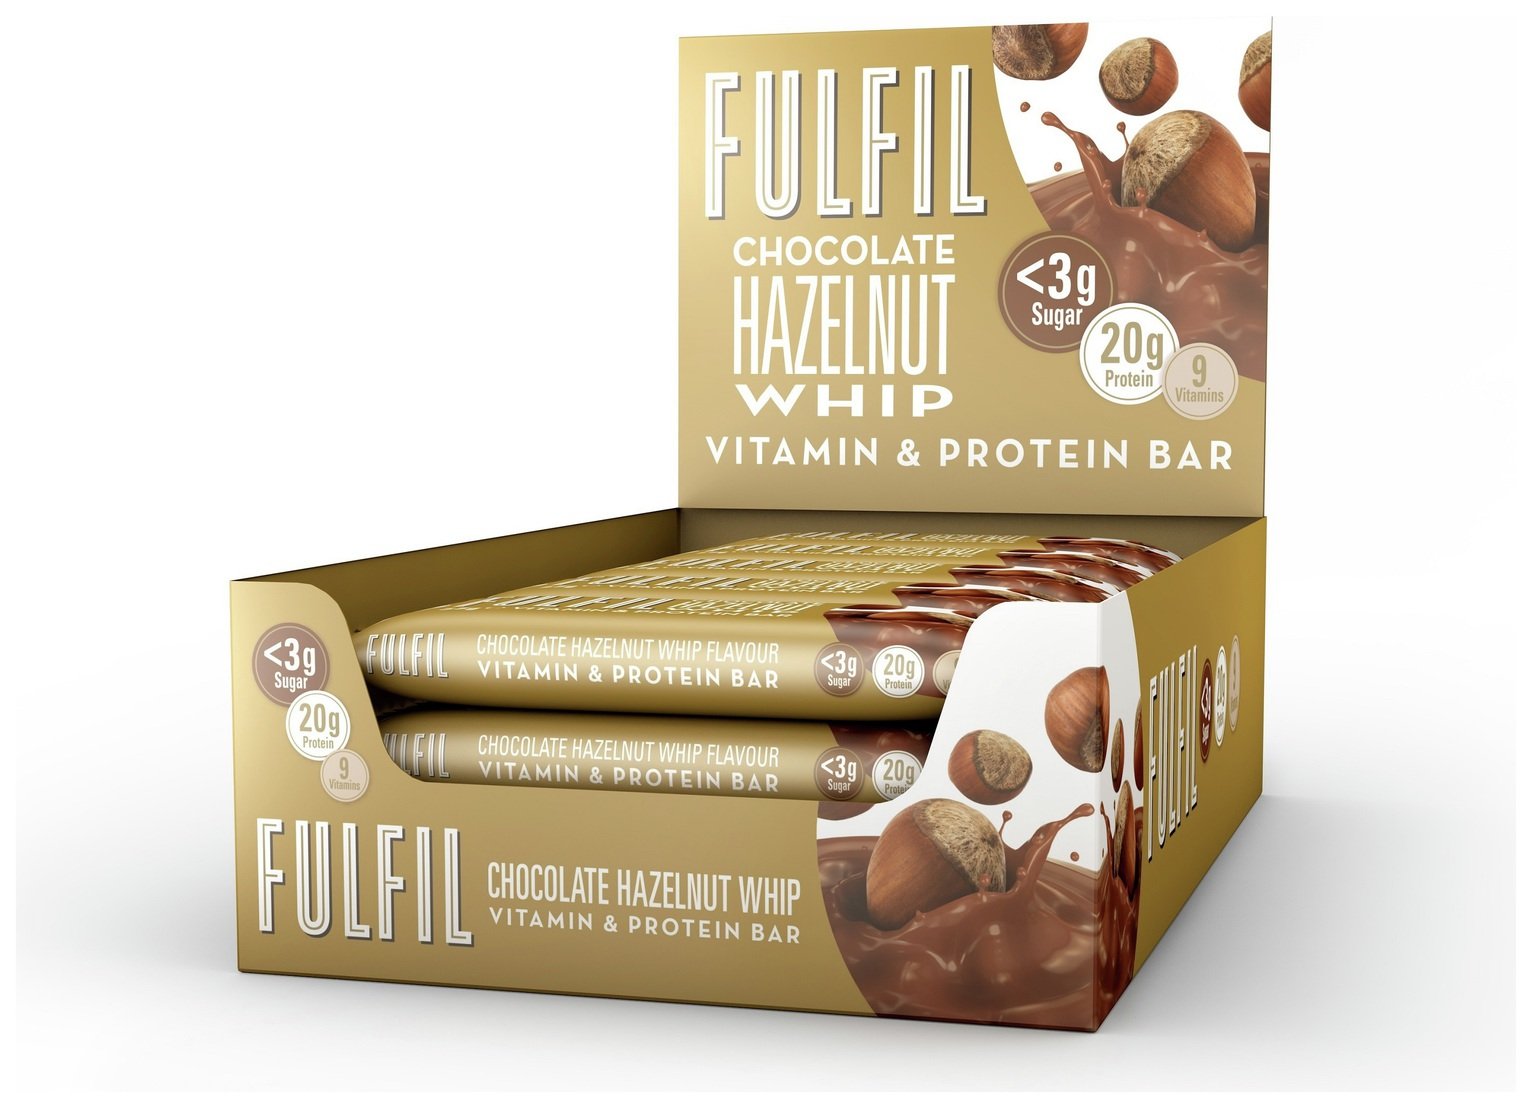 FULFIL Chocolate Hazelnut Whip Vitamin & Protein Bars 15x55g